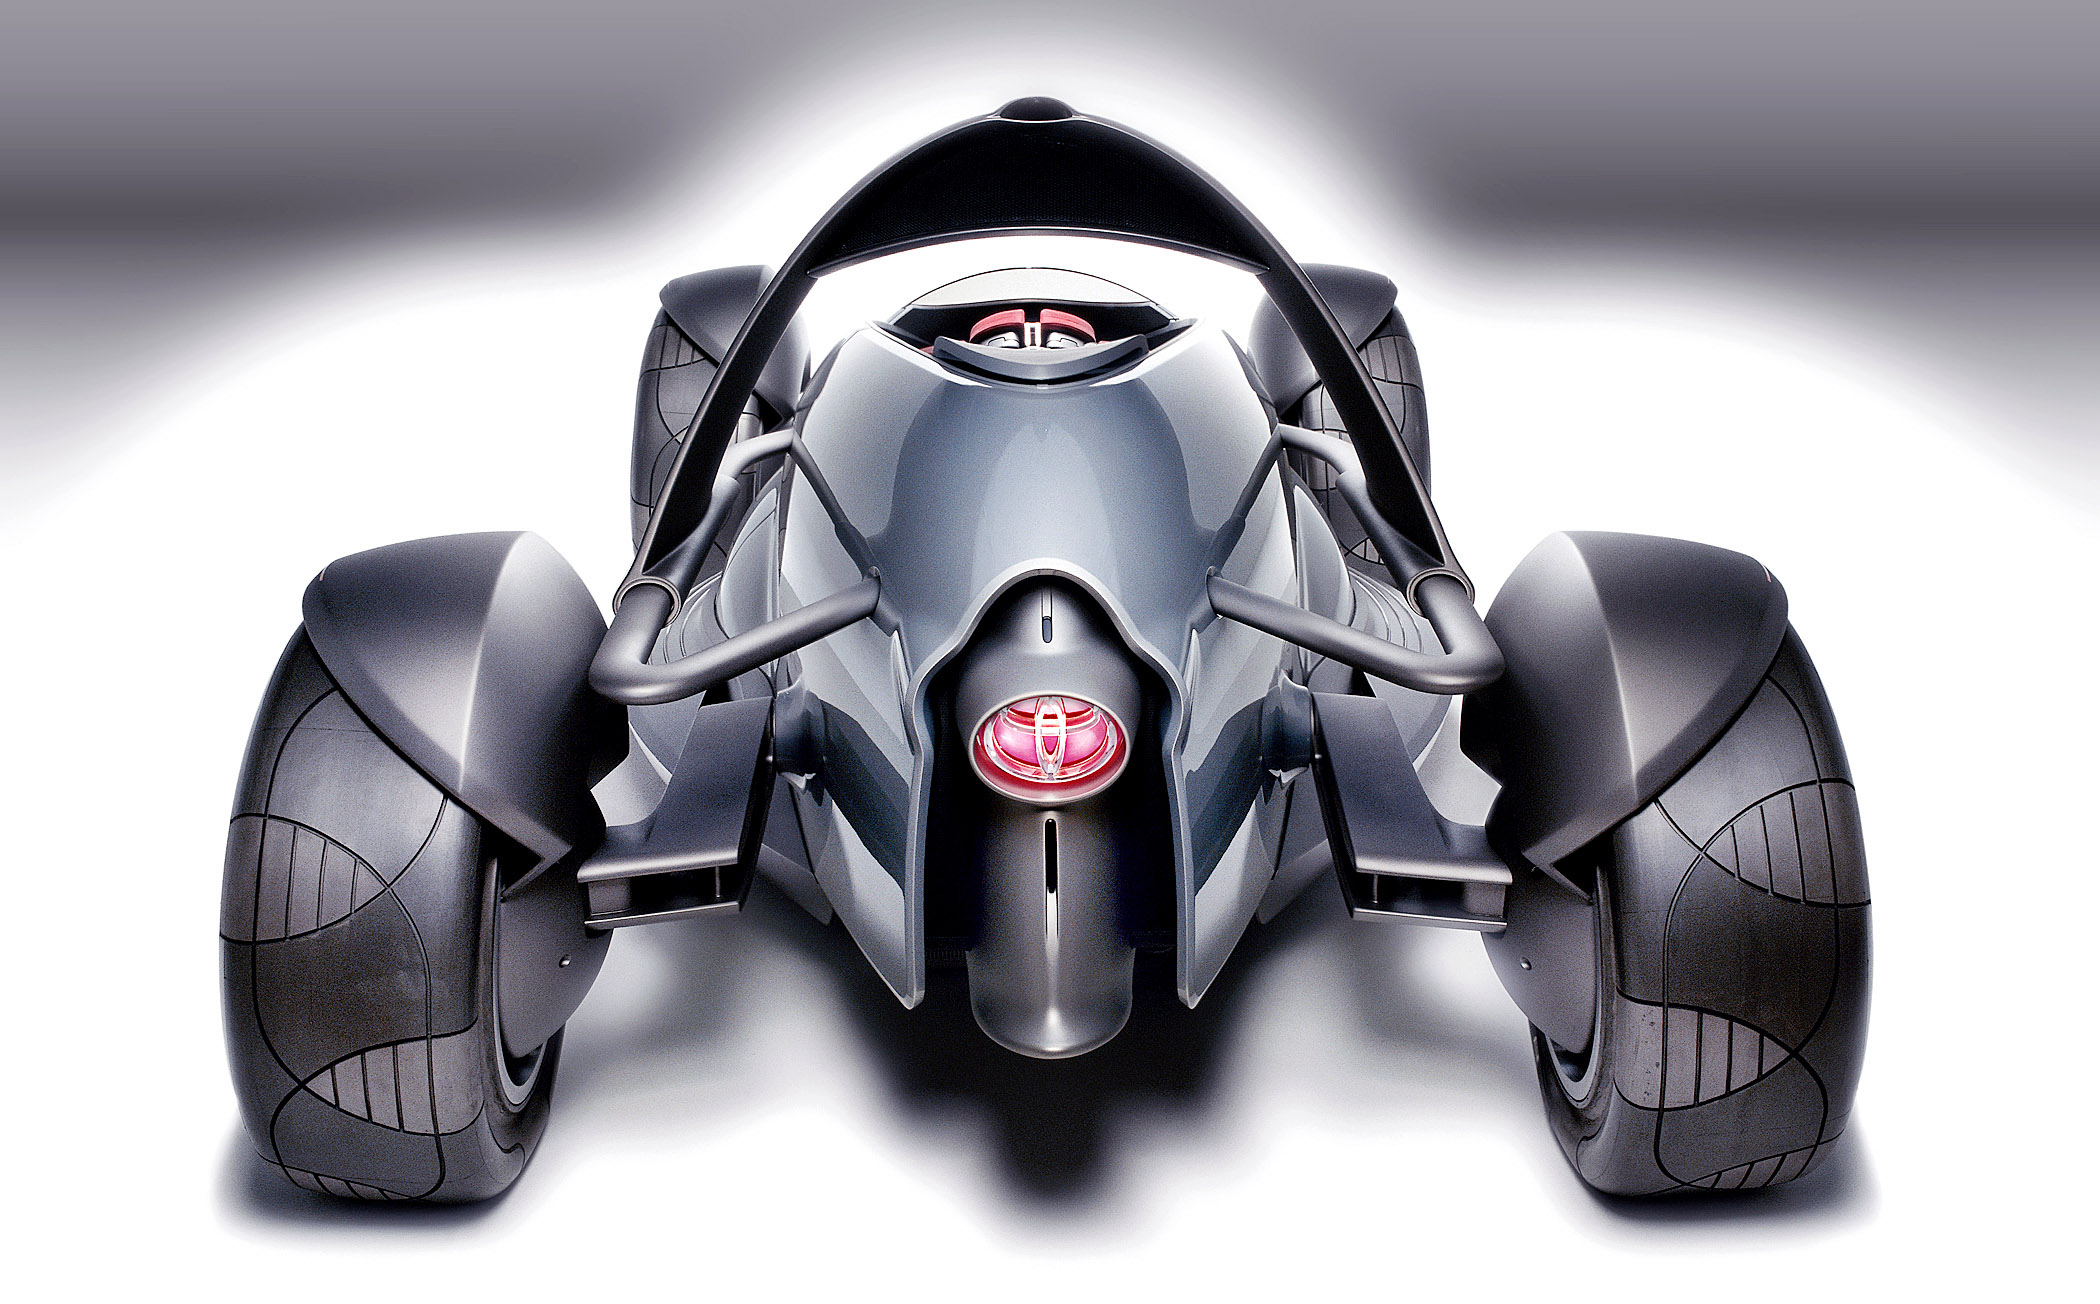 Toyota Motor Triathlon Race Car concept